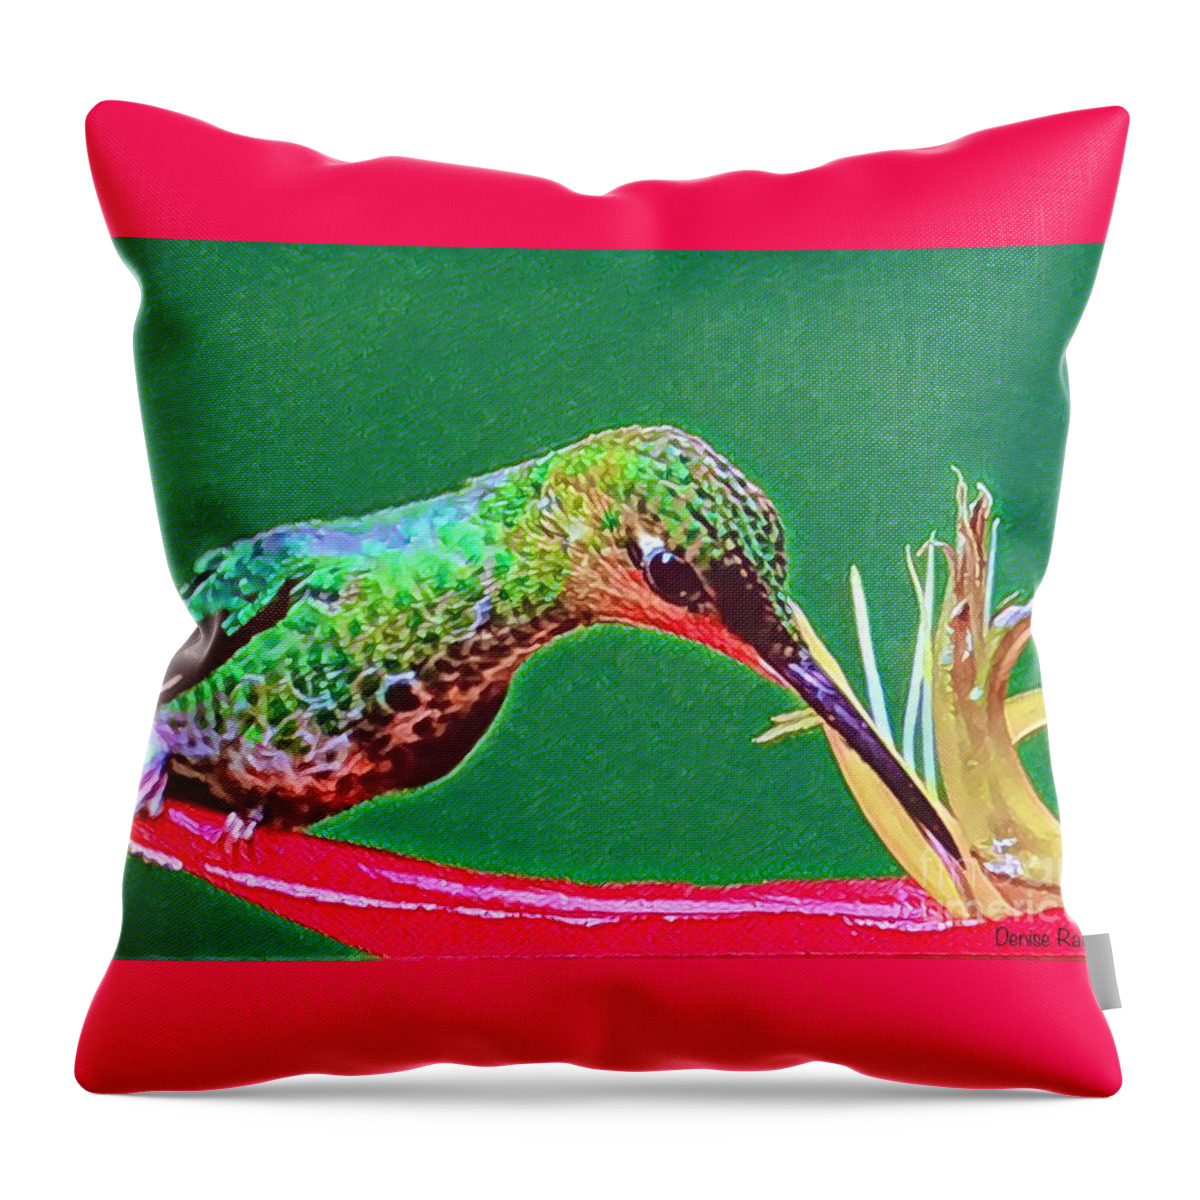 Hummingbird Throw Pillow featuring the digital art Sweet Nectar by Denise Railey